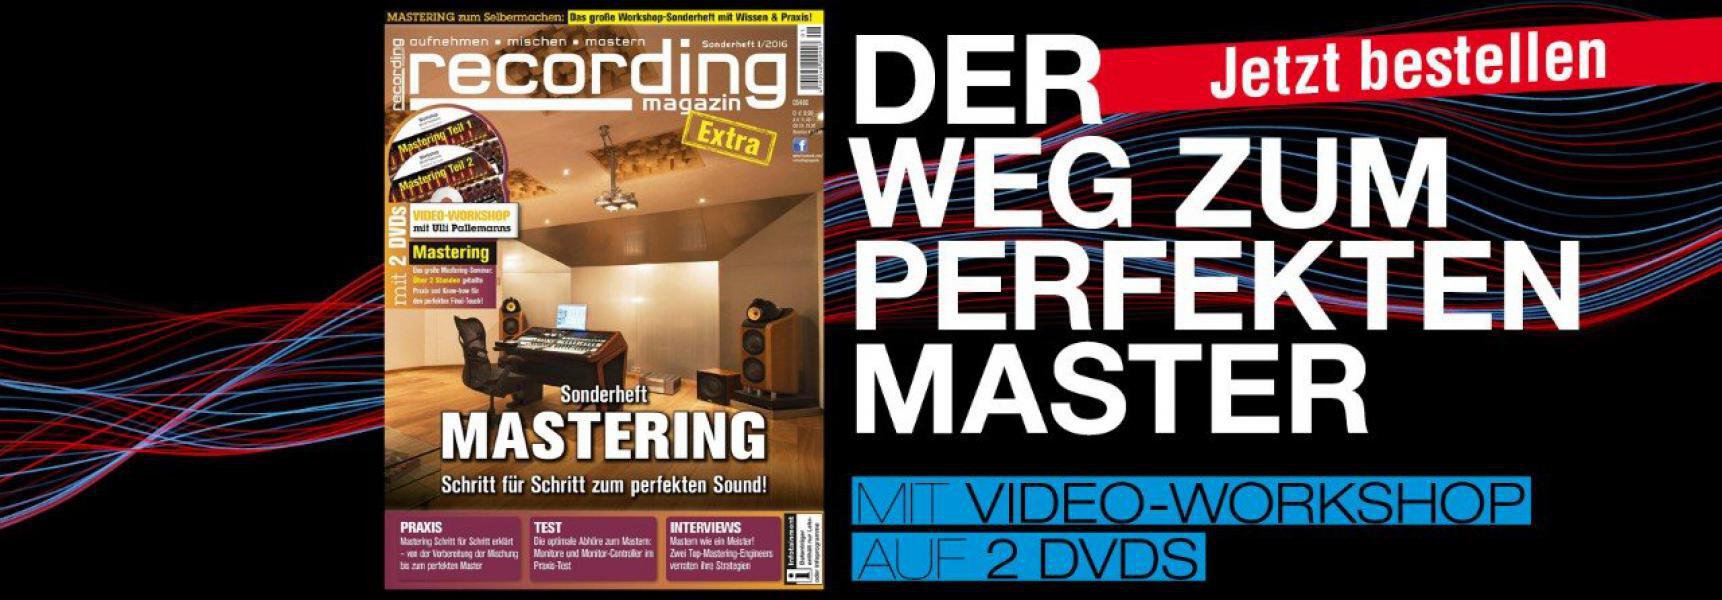 Recording Magazin Sonderheft Mastering